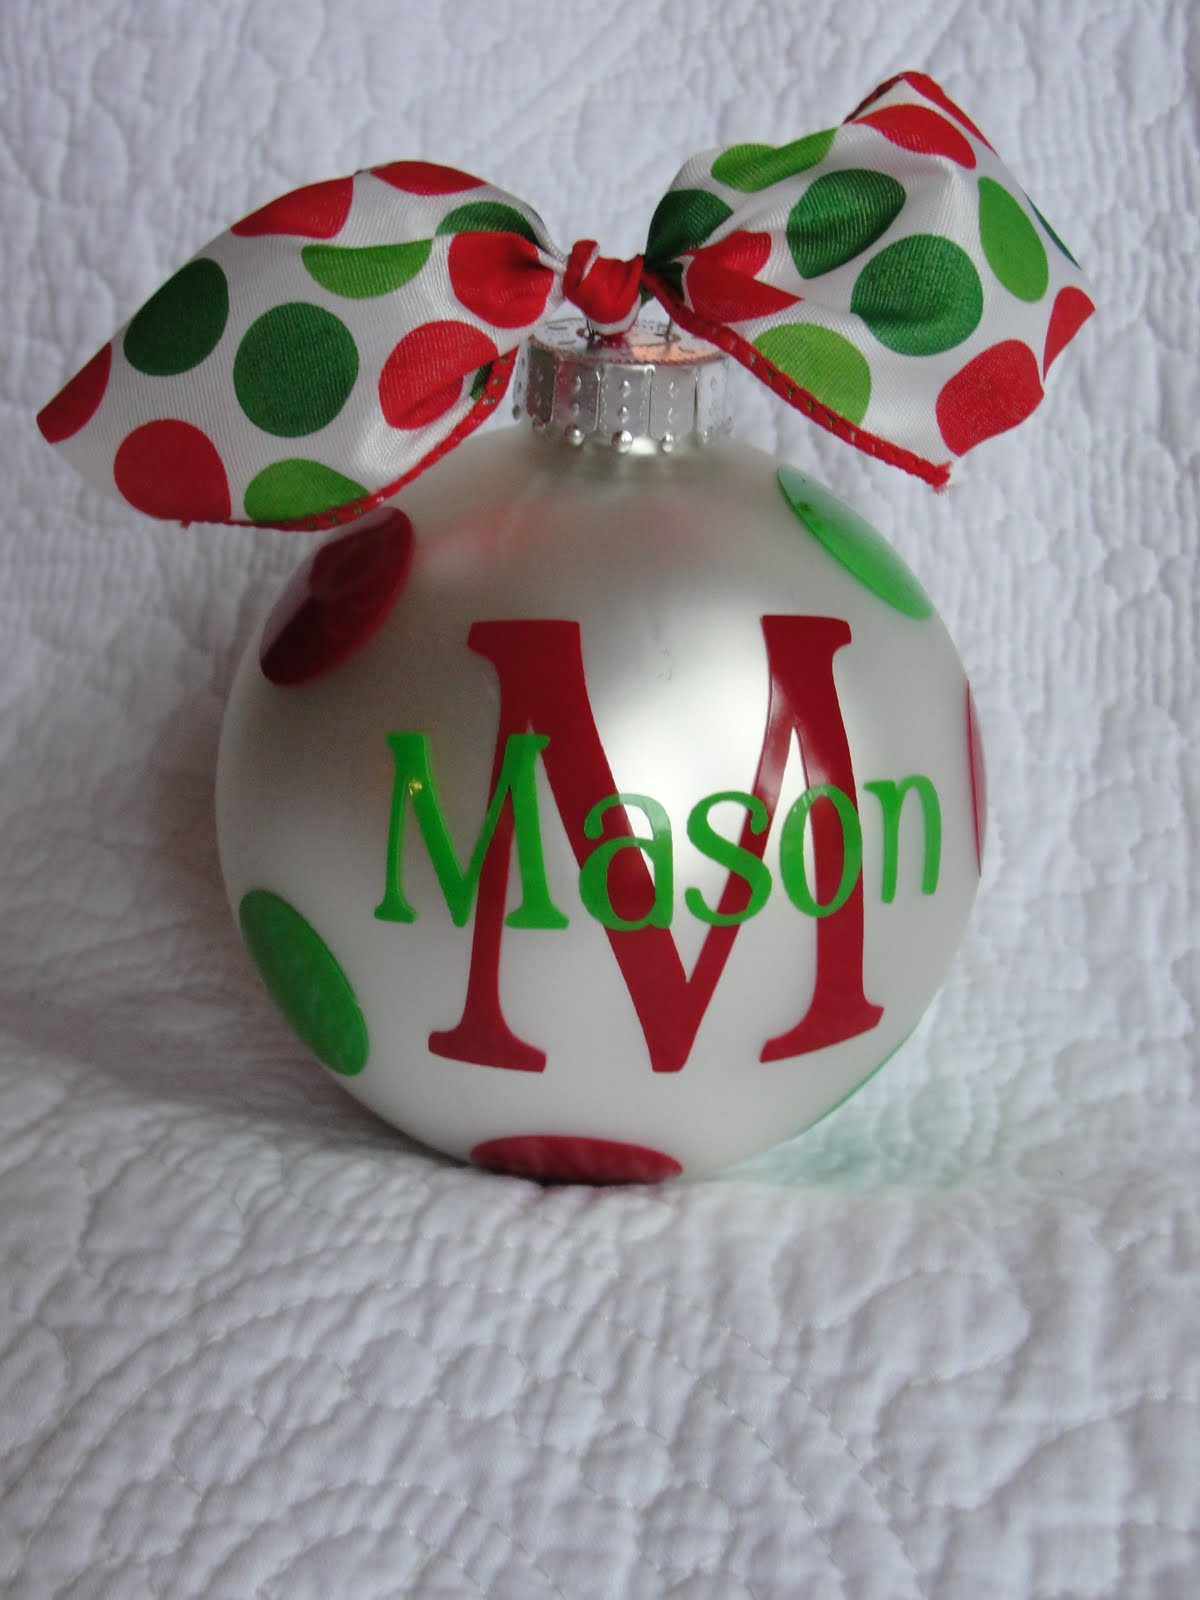 DIY Christmas Ornament Ideas
 Sassy Sites more than 130 Homemade Ornaments